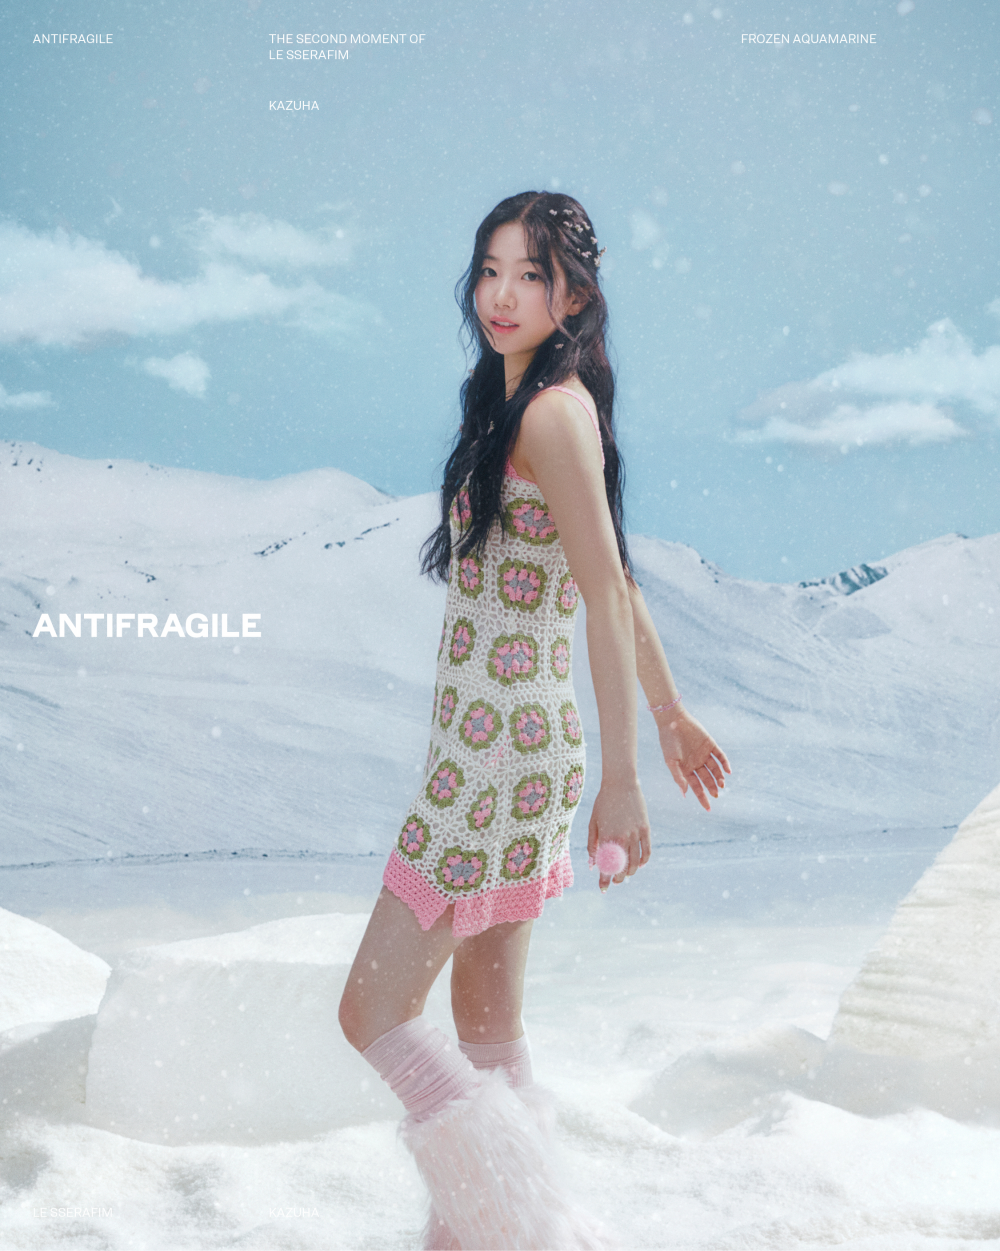 [Камбэк] LE SSERAFIM мини-альбом "ANTIFRAGILE": загадочные трек-сэмплы